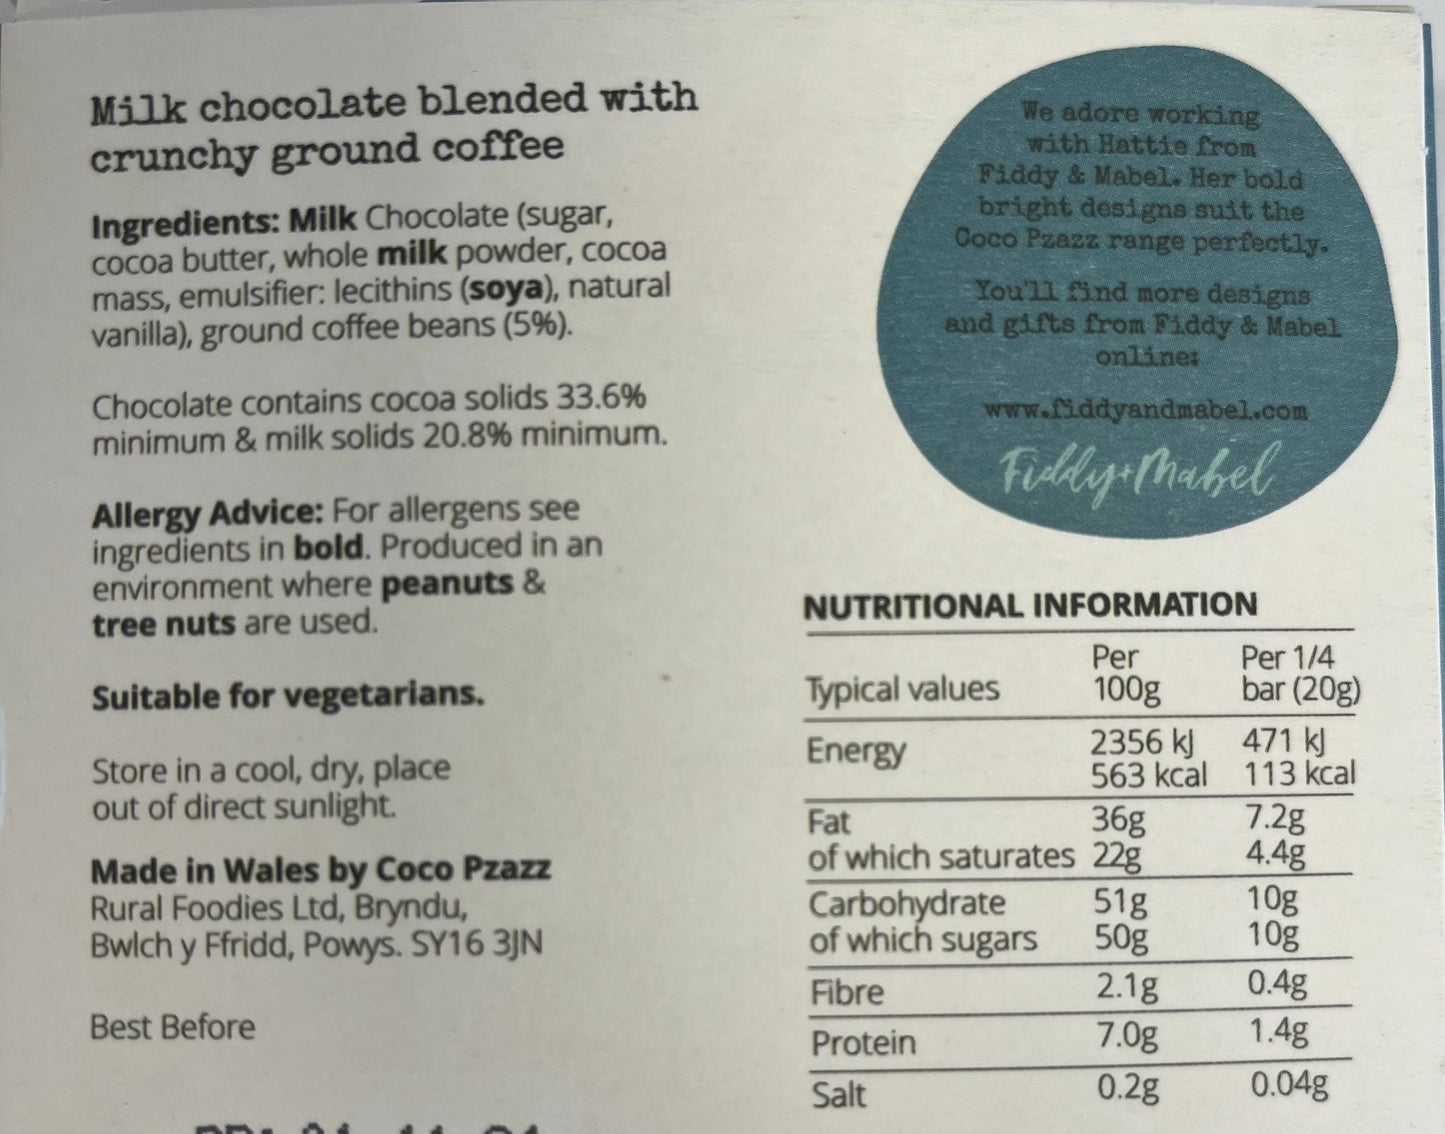 Coco Pzazz Highland Cow Crunchy Coffee Milk Chocolate Bar